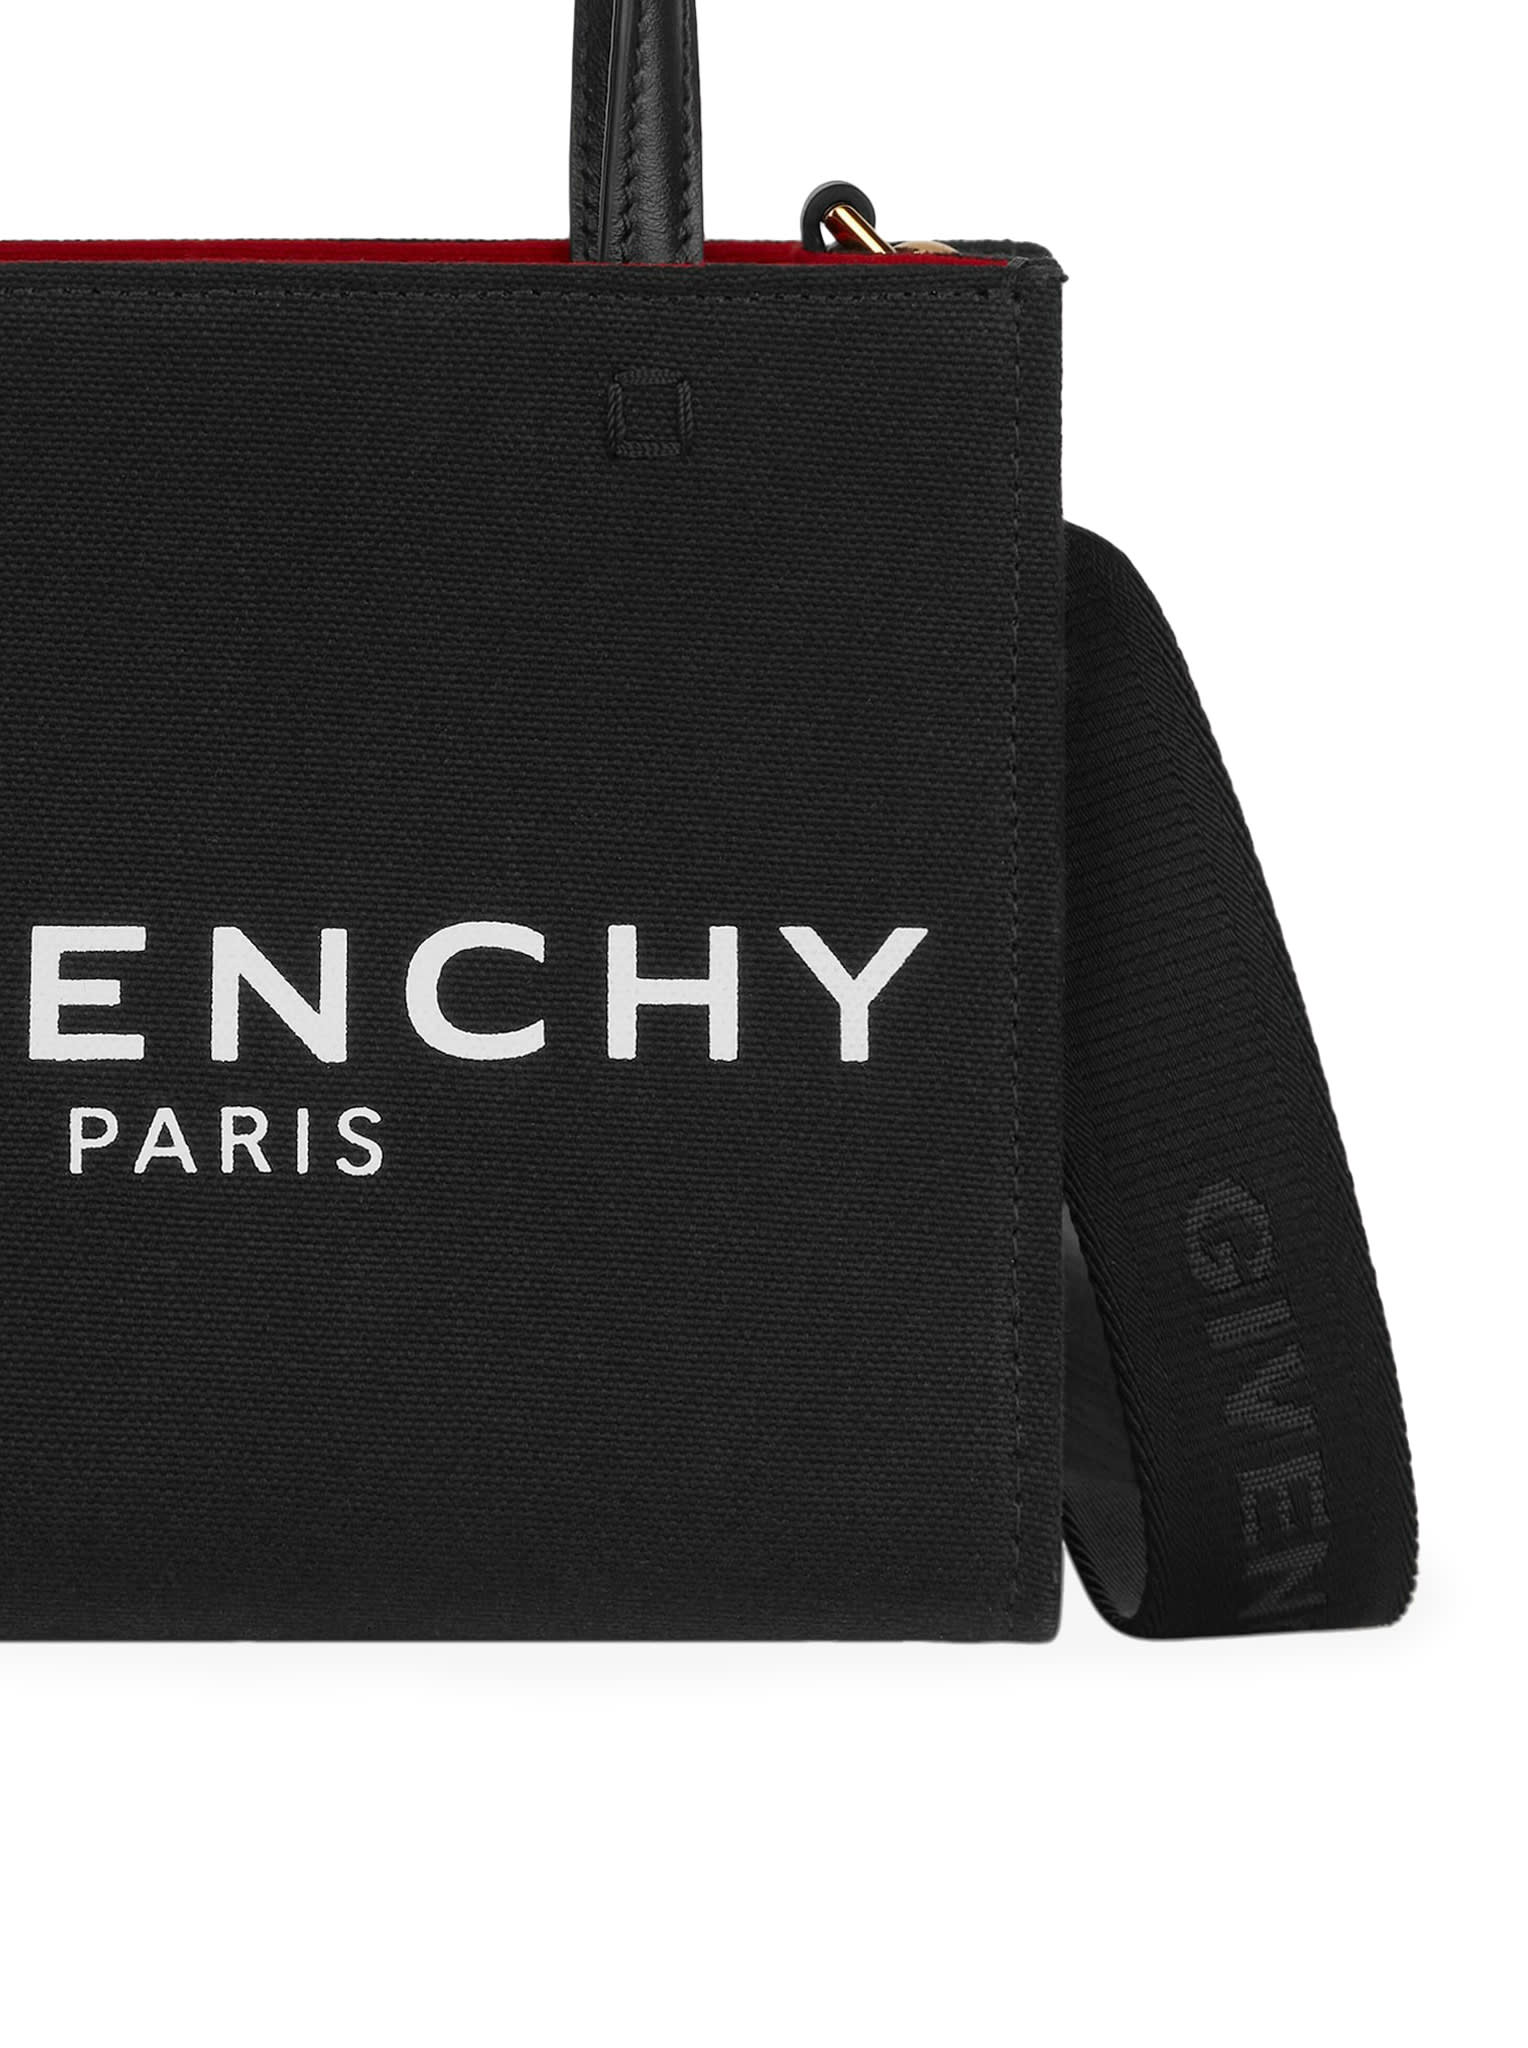 Shop Givenchy G-tote - Mini Tote Bag In Black